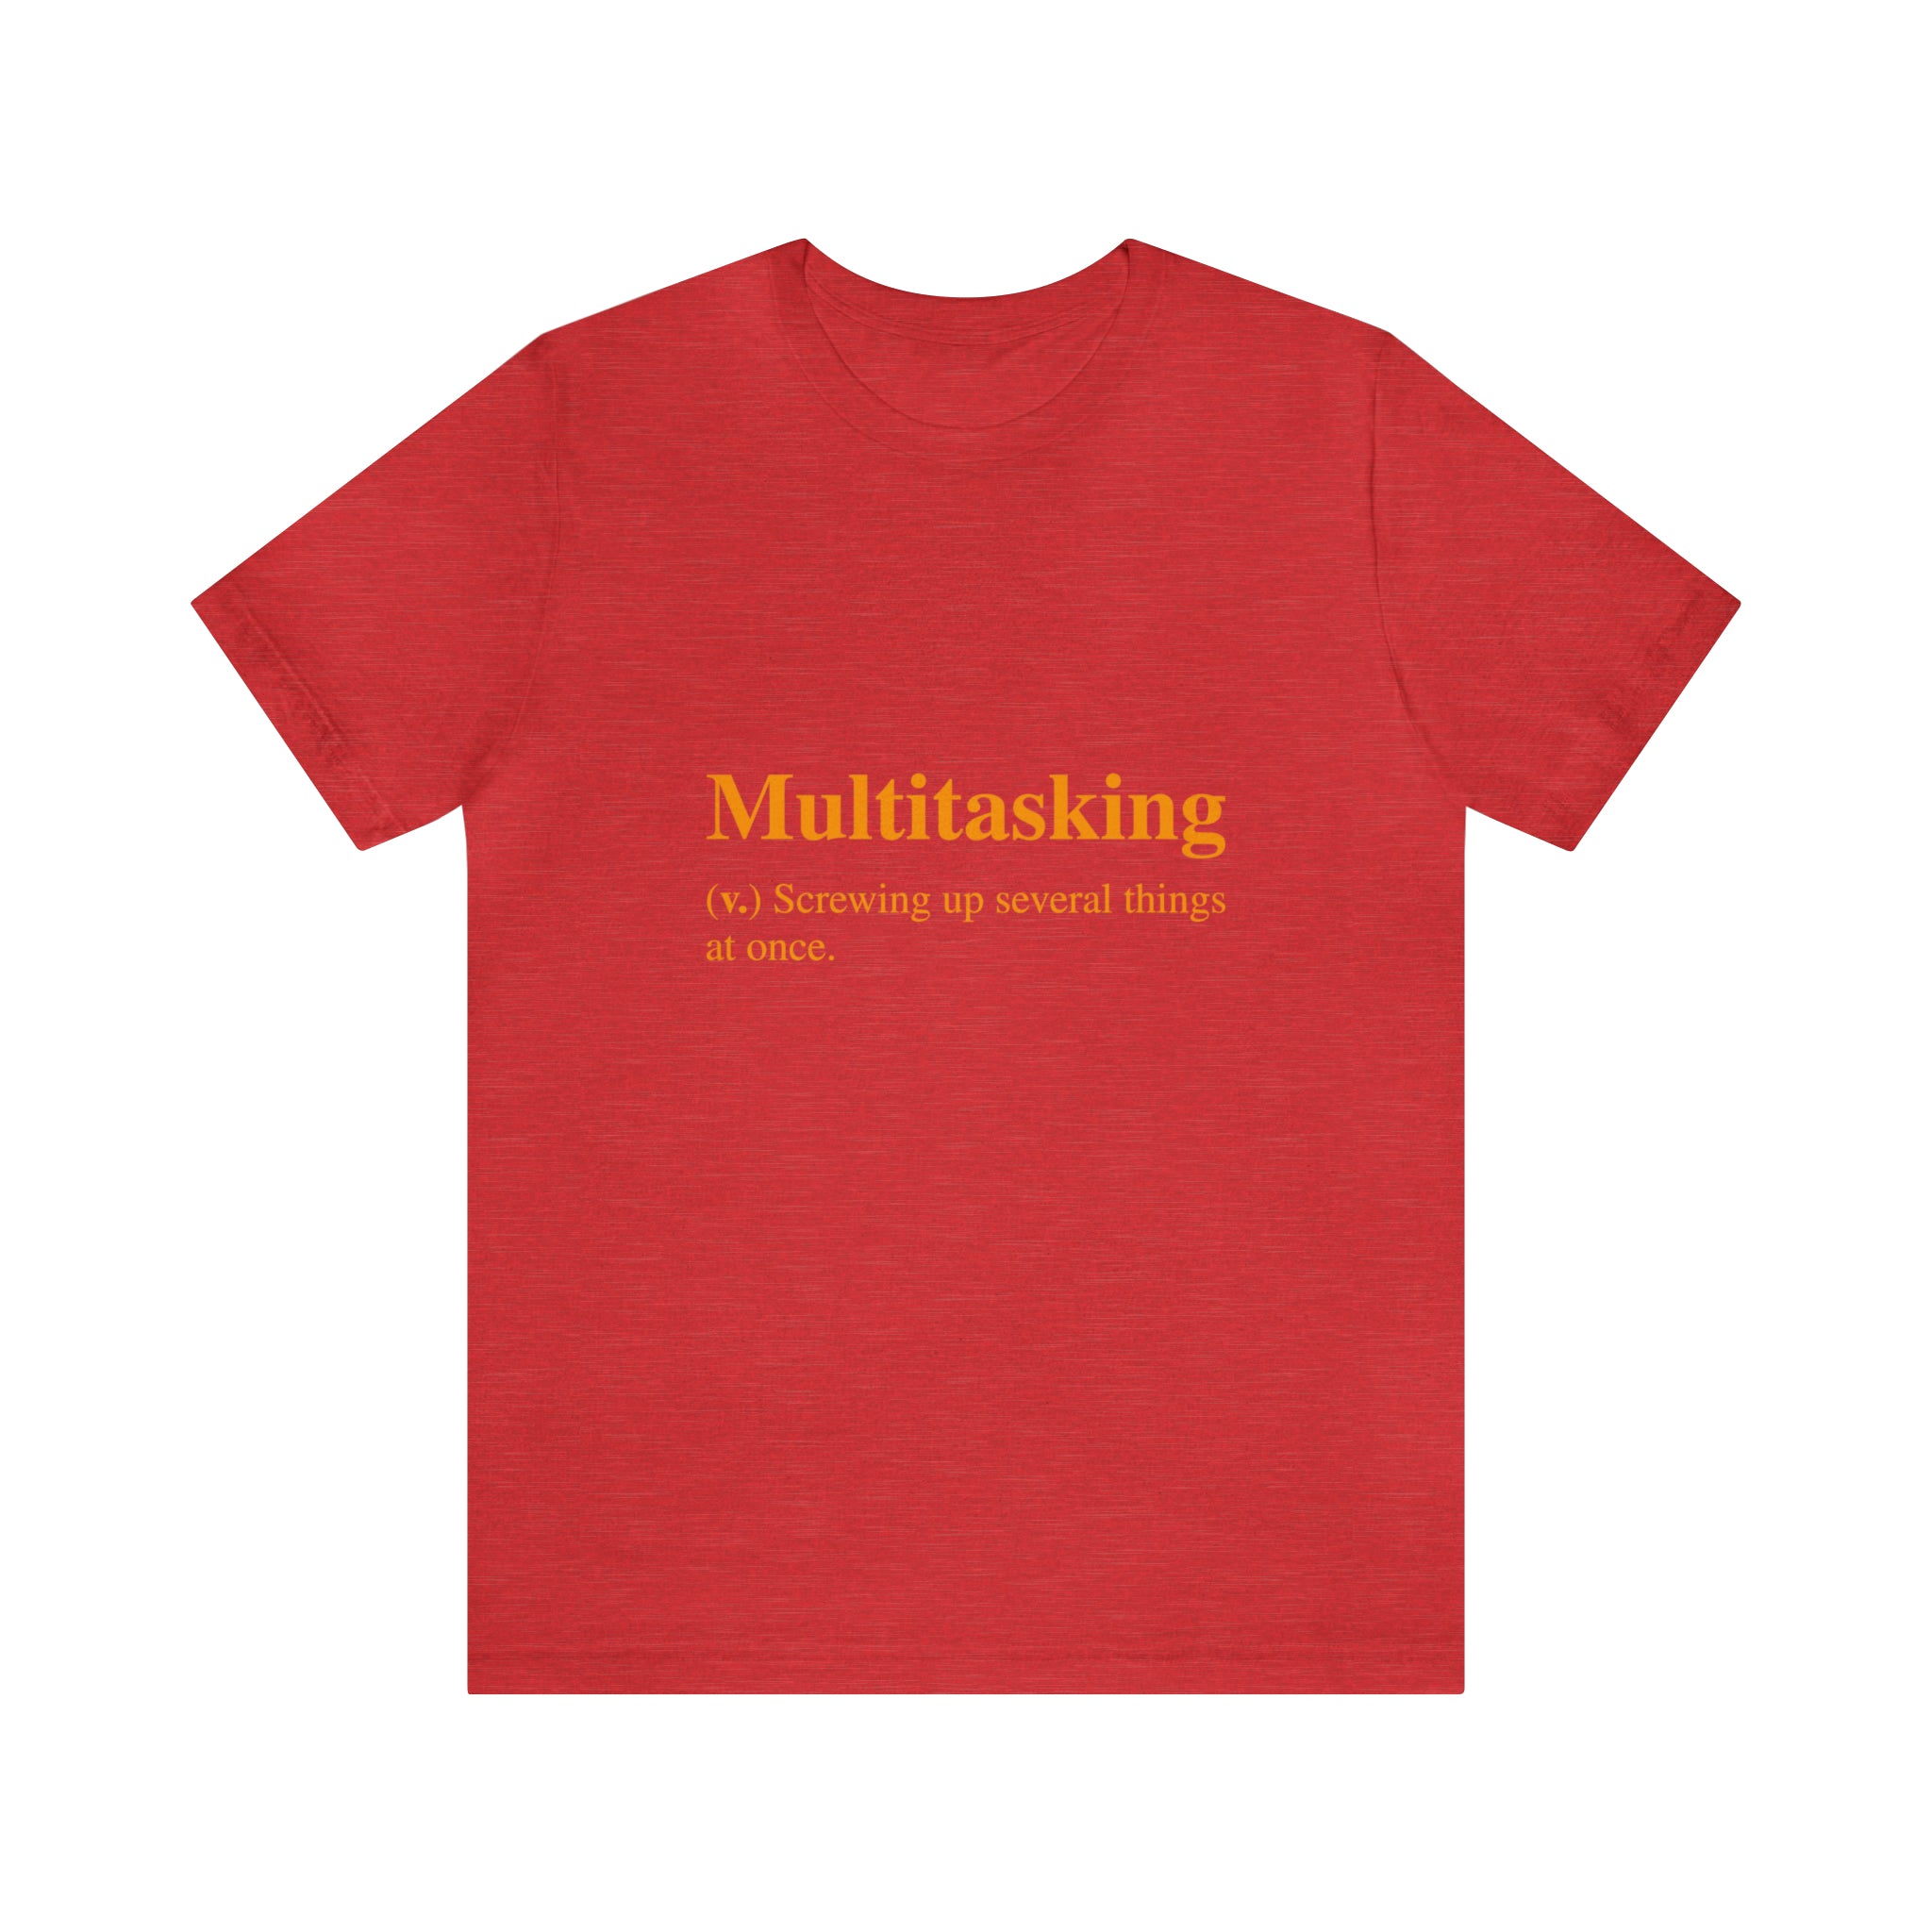 A fashionable Multitasking T-Shirt in vibrant red, boldly displaying the word "multitasking.